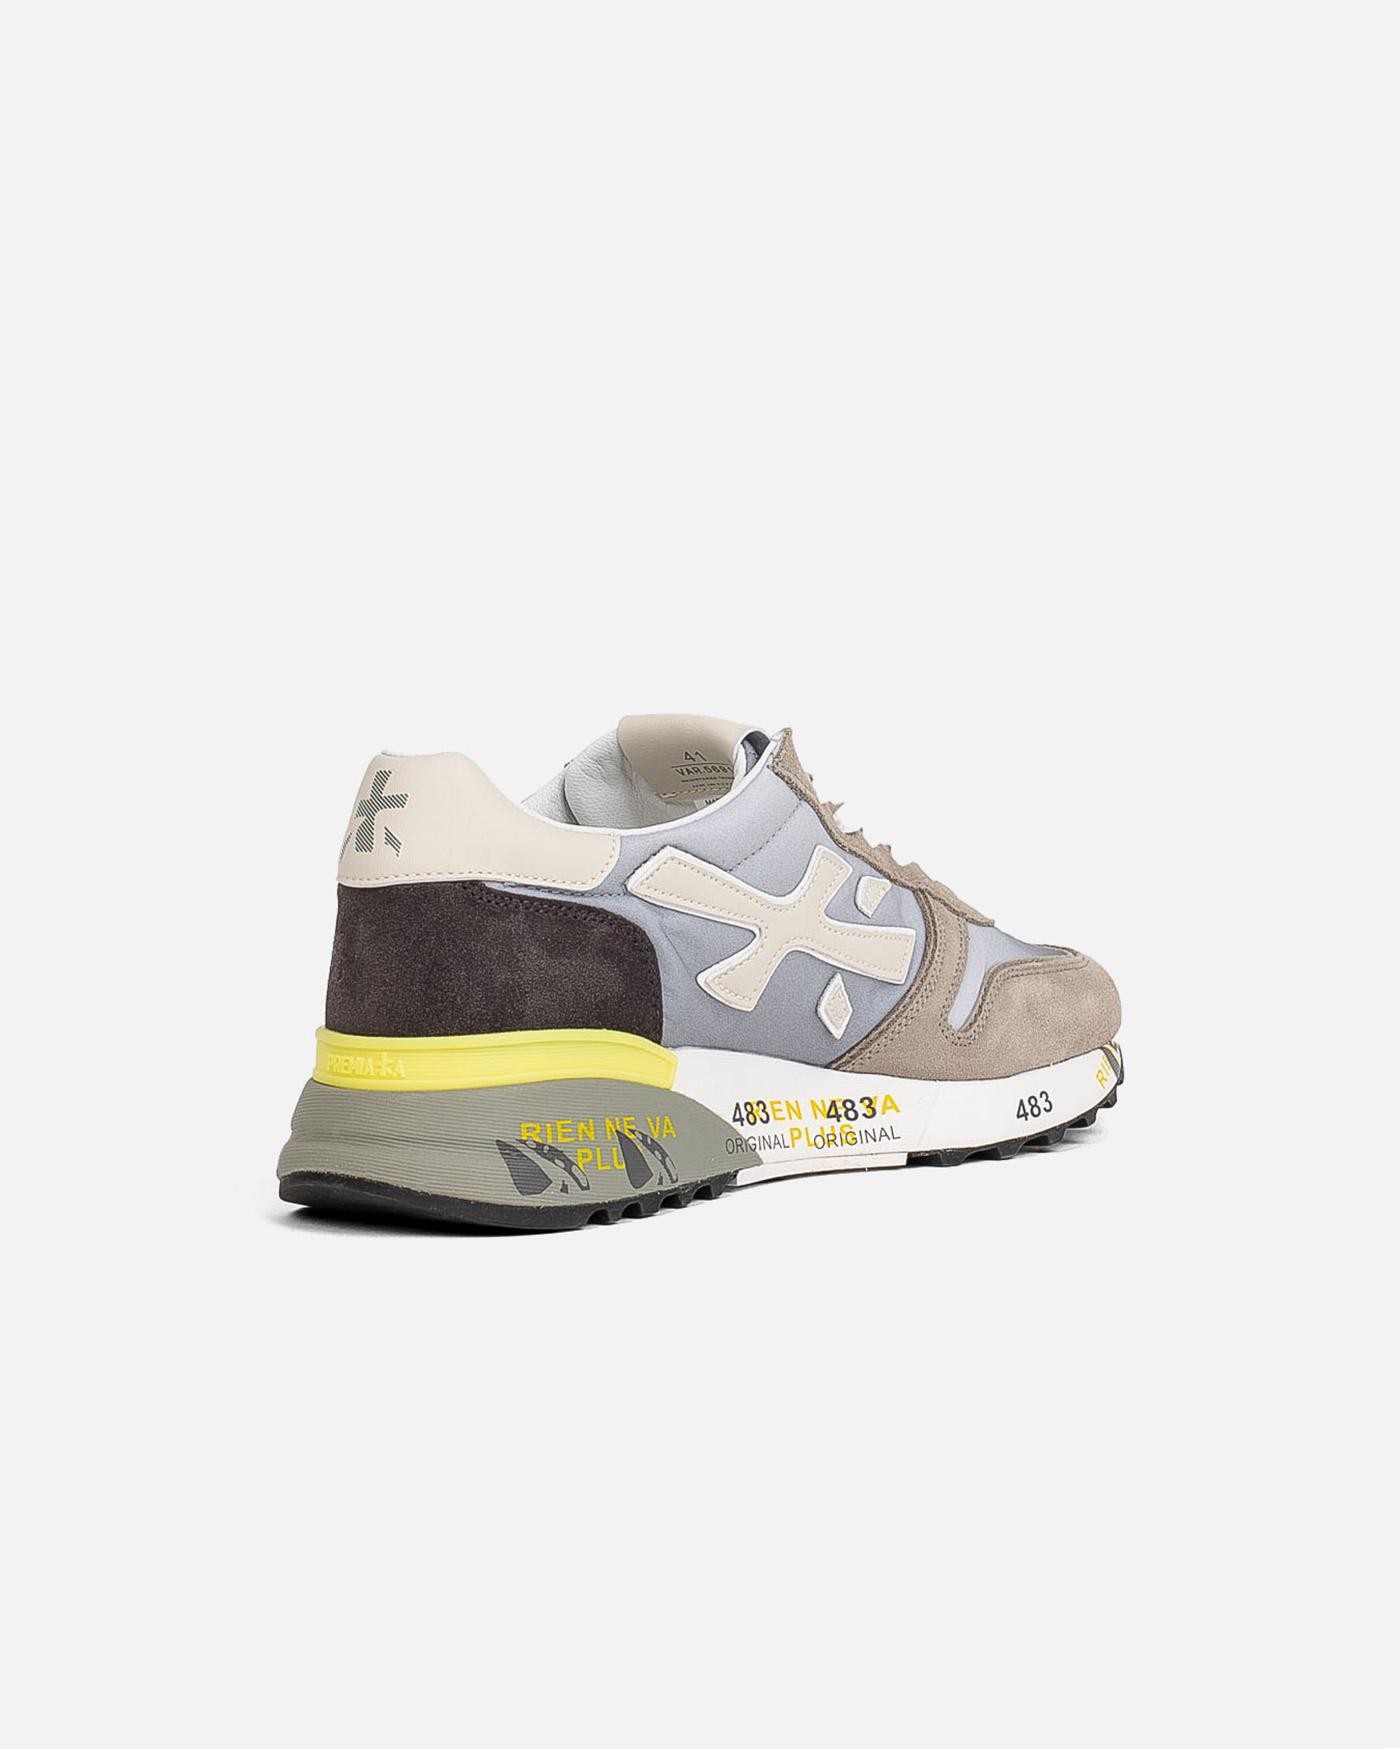 premiata-zapatillas-mick-var-5691-sneakers-grey-grises-2